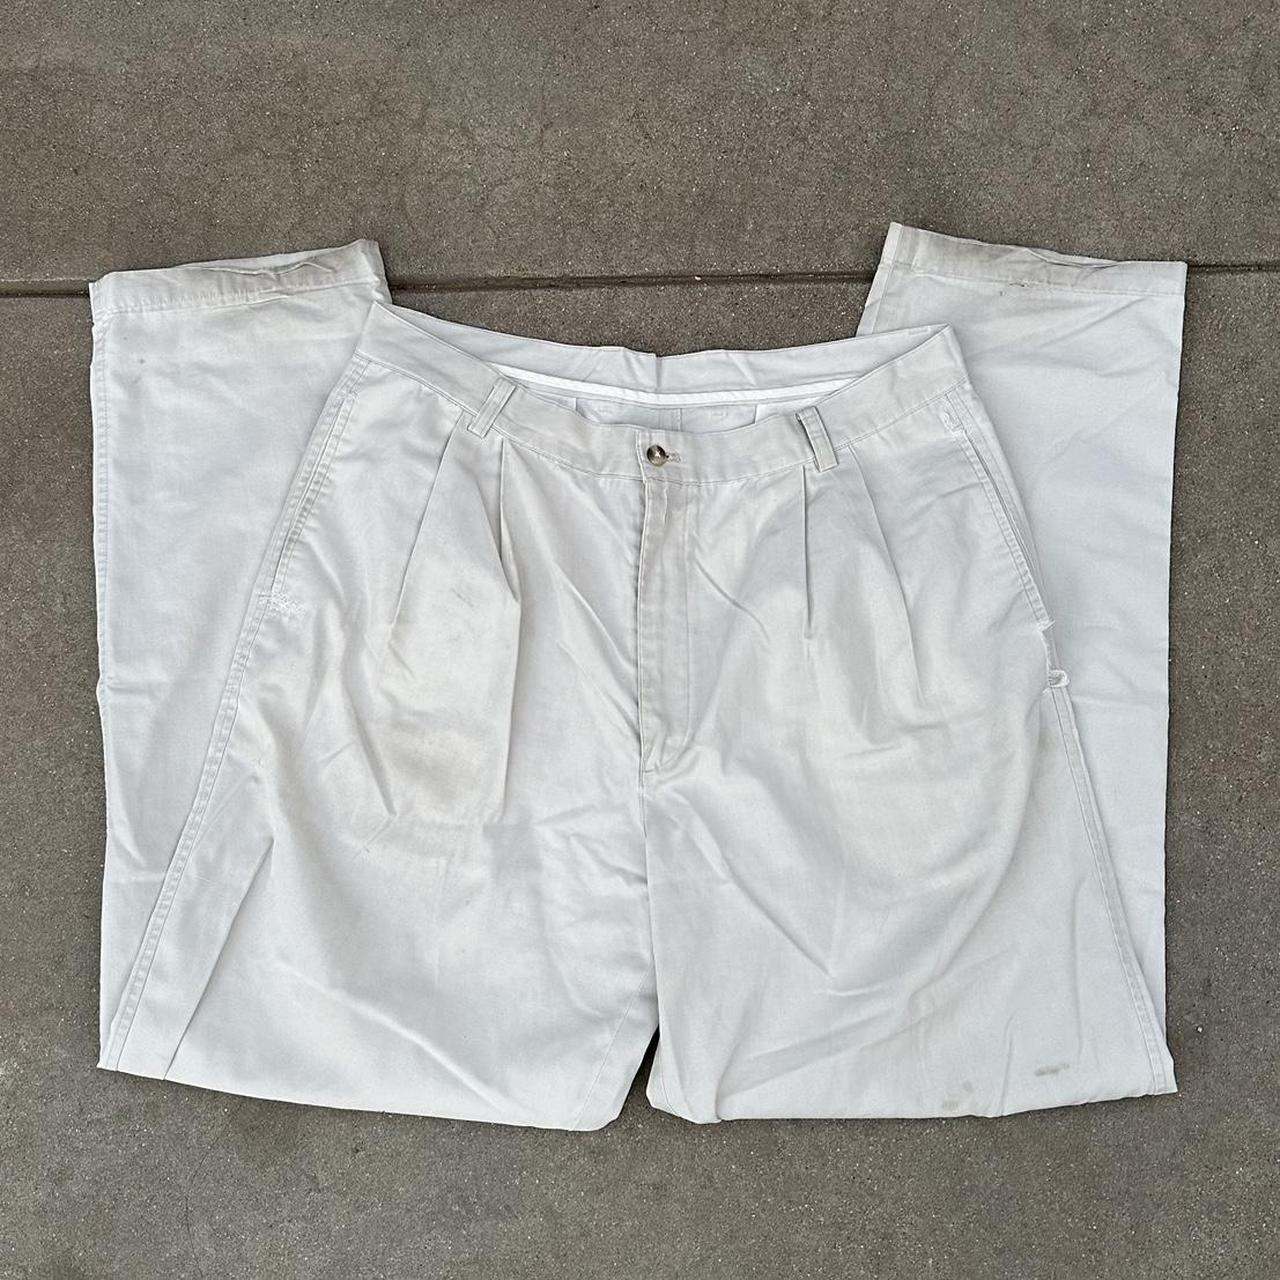 Ming Ren White Pants - by ming ren - labeled size... - Depop